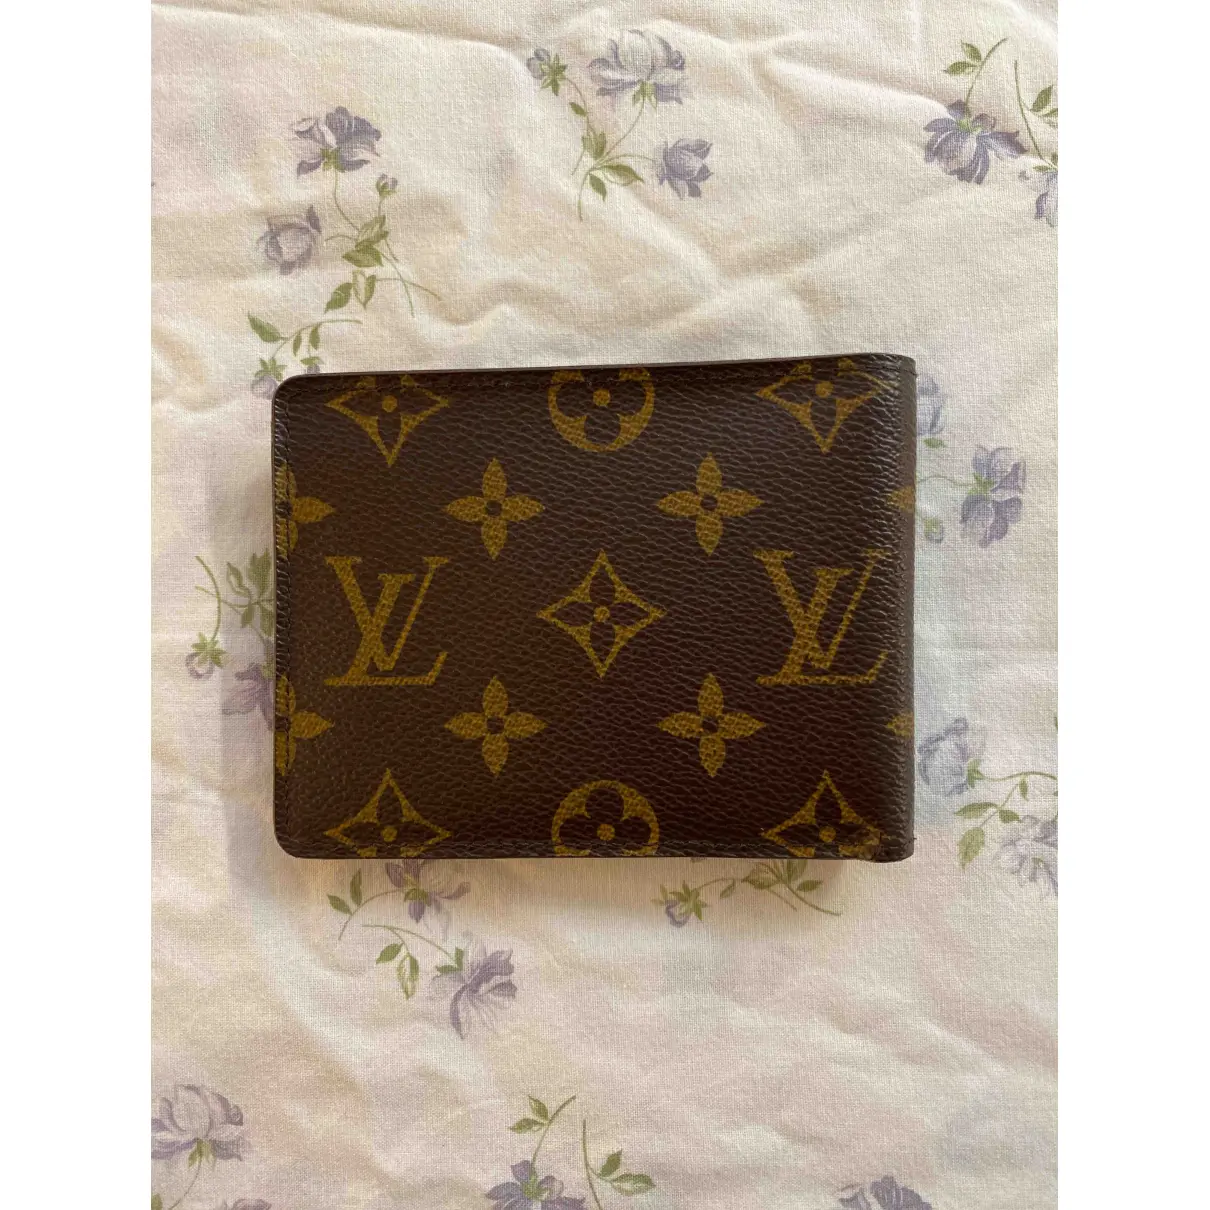 Buy Louis Vuitton Multiple cloth small bag online